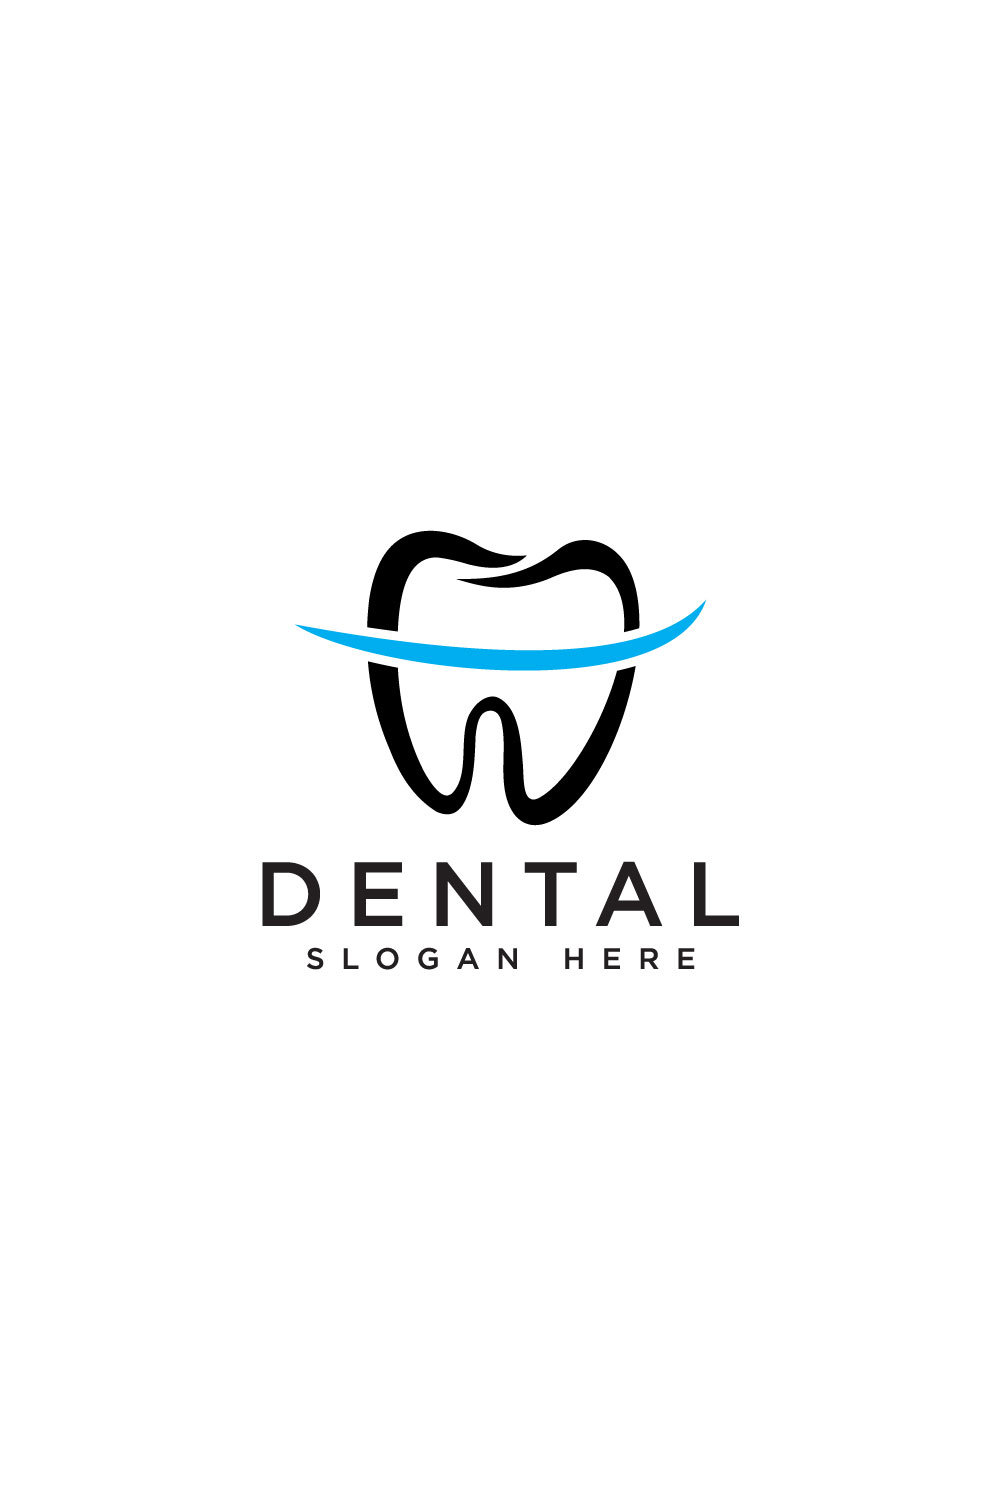 dental logo vector design pinterest preview image.